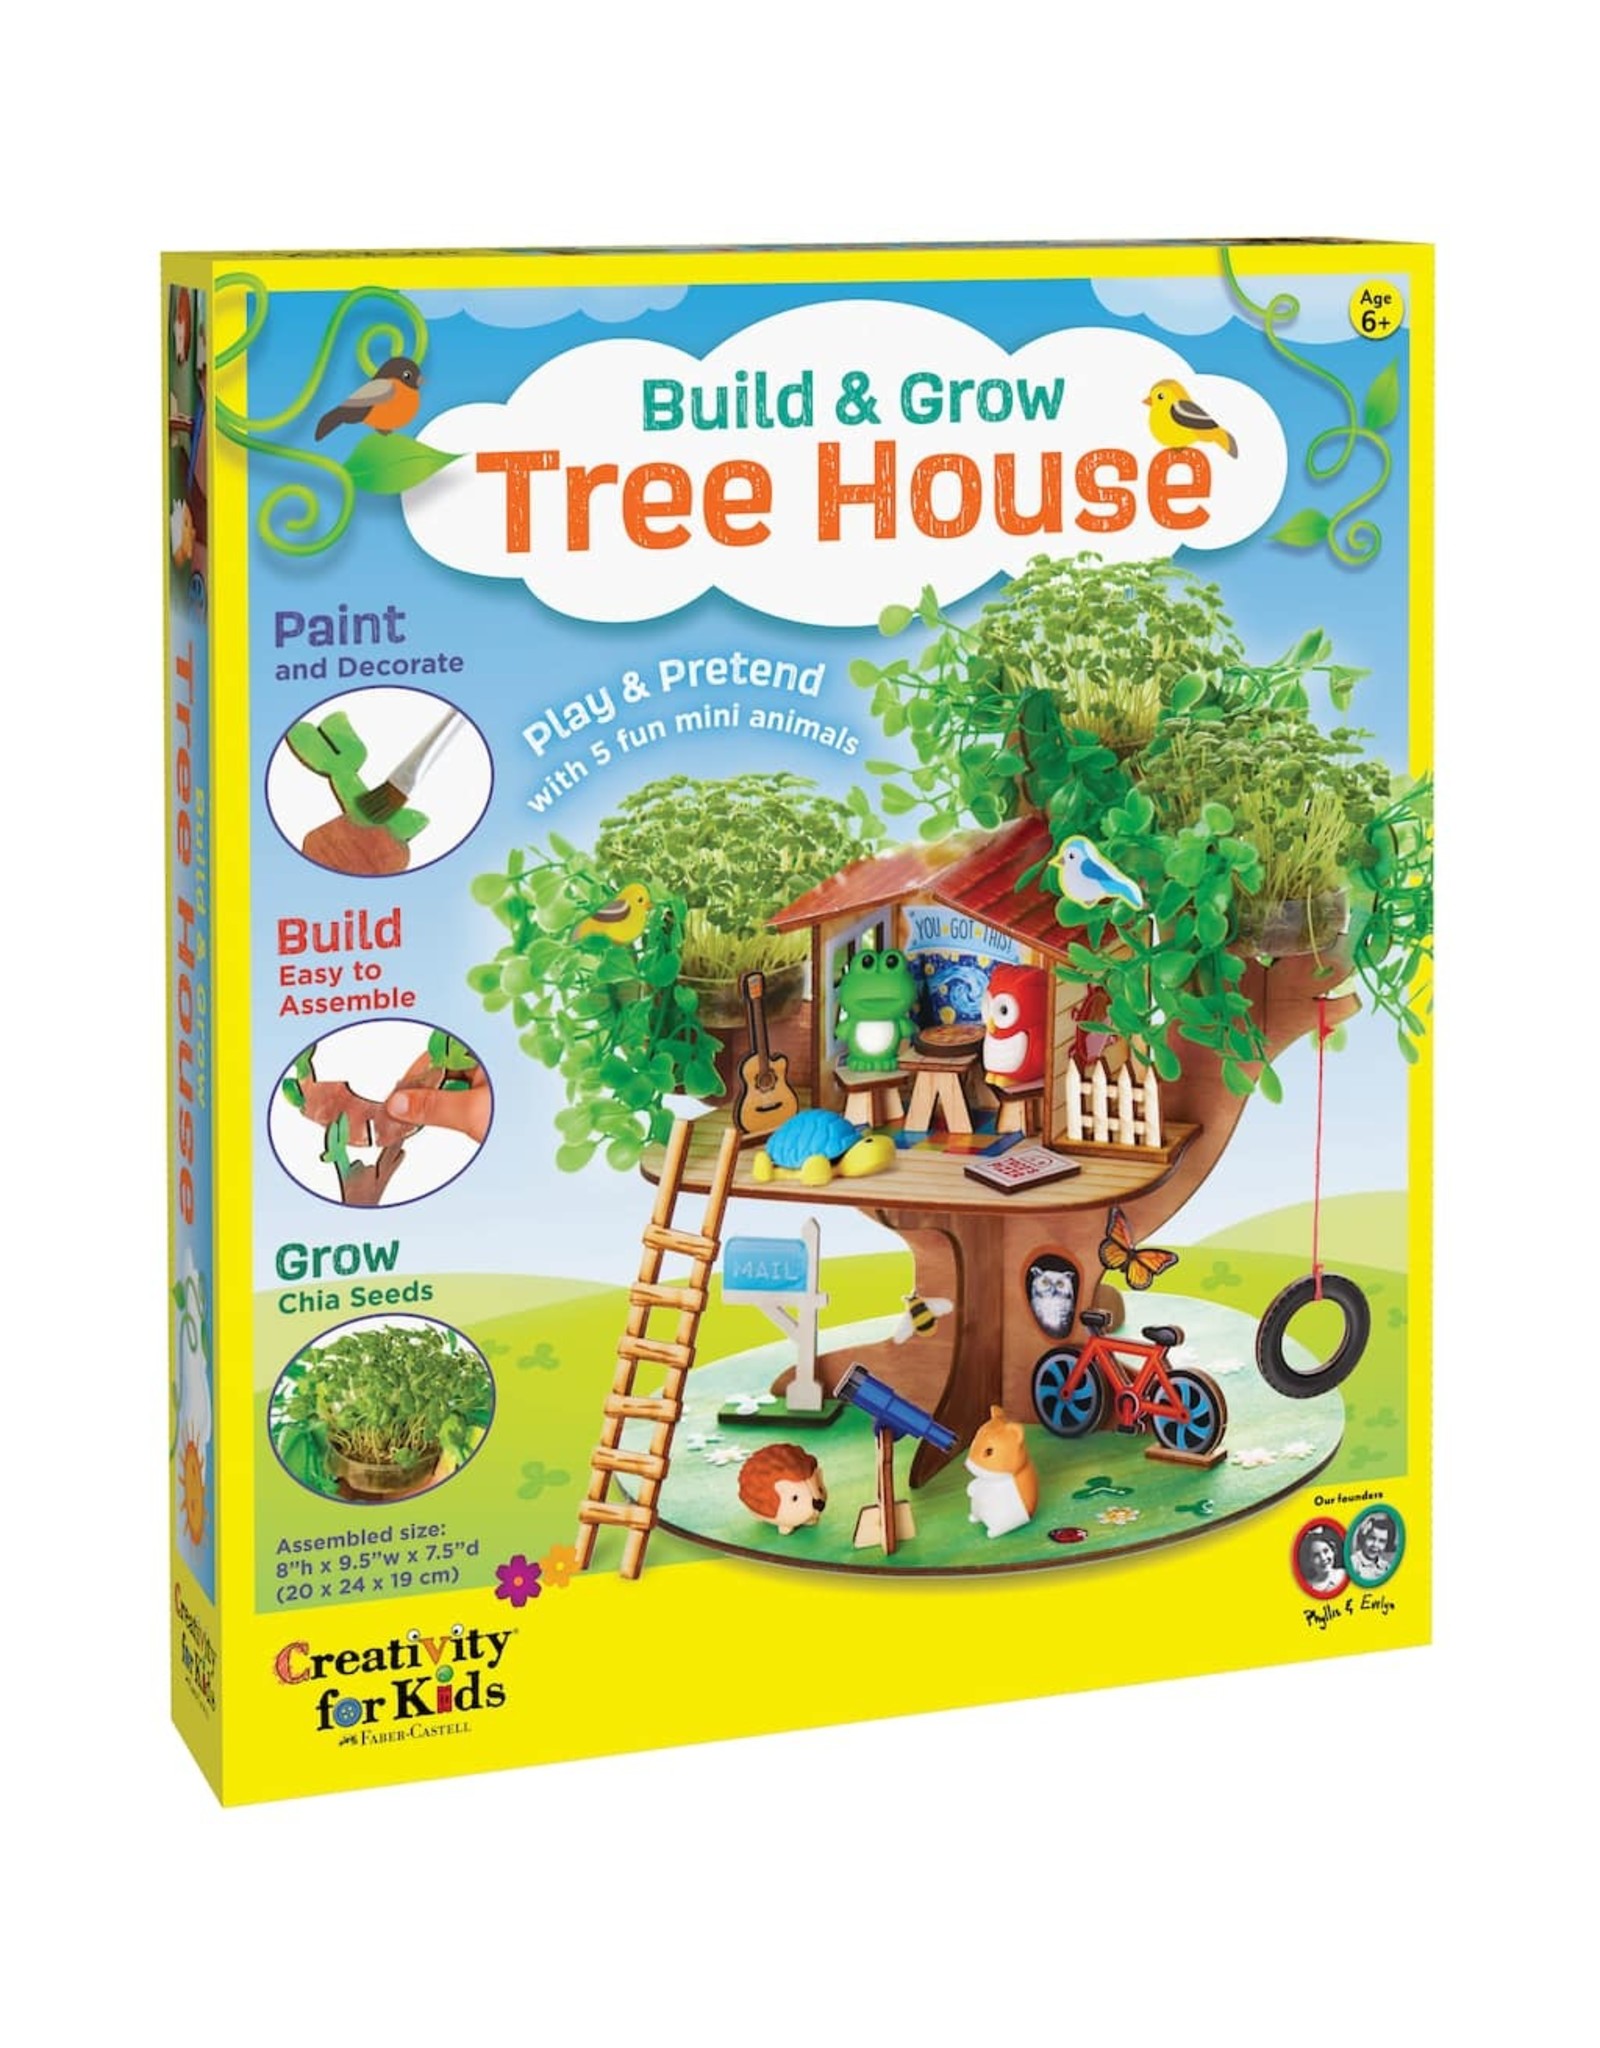 Creativity For Kids Build and Grow Tree House